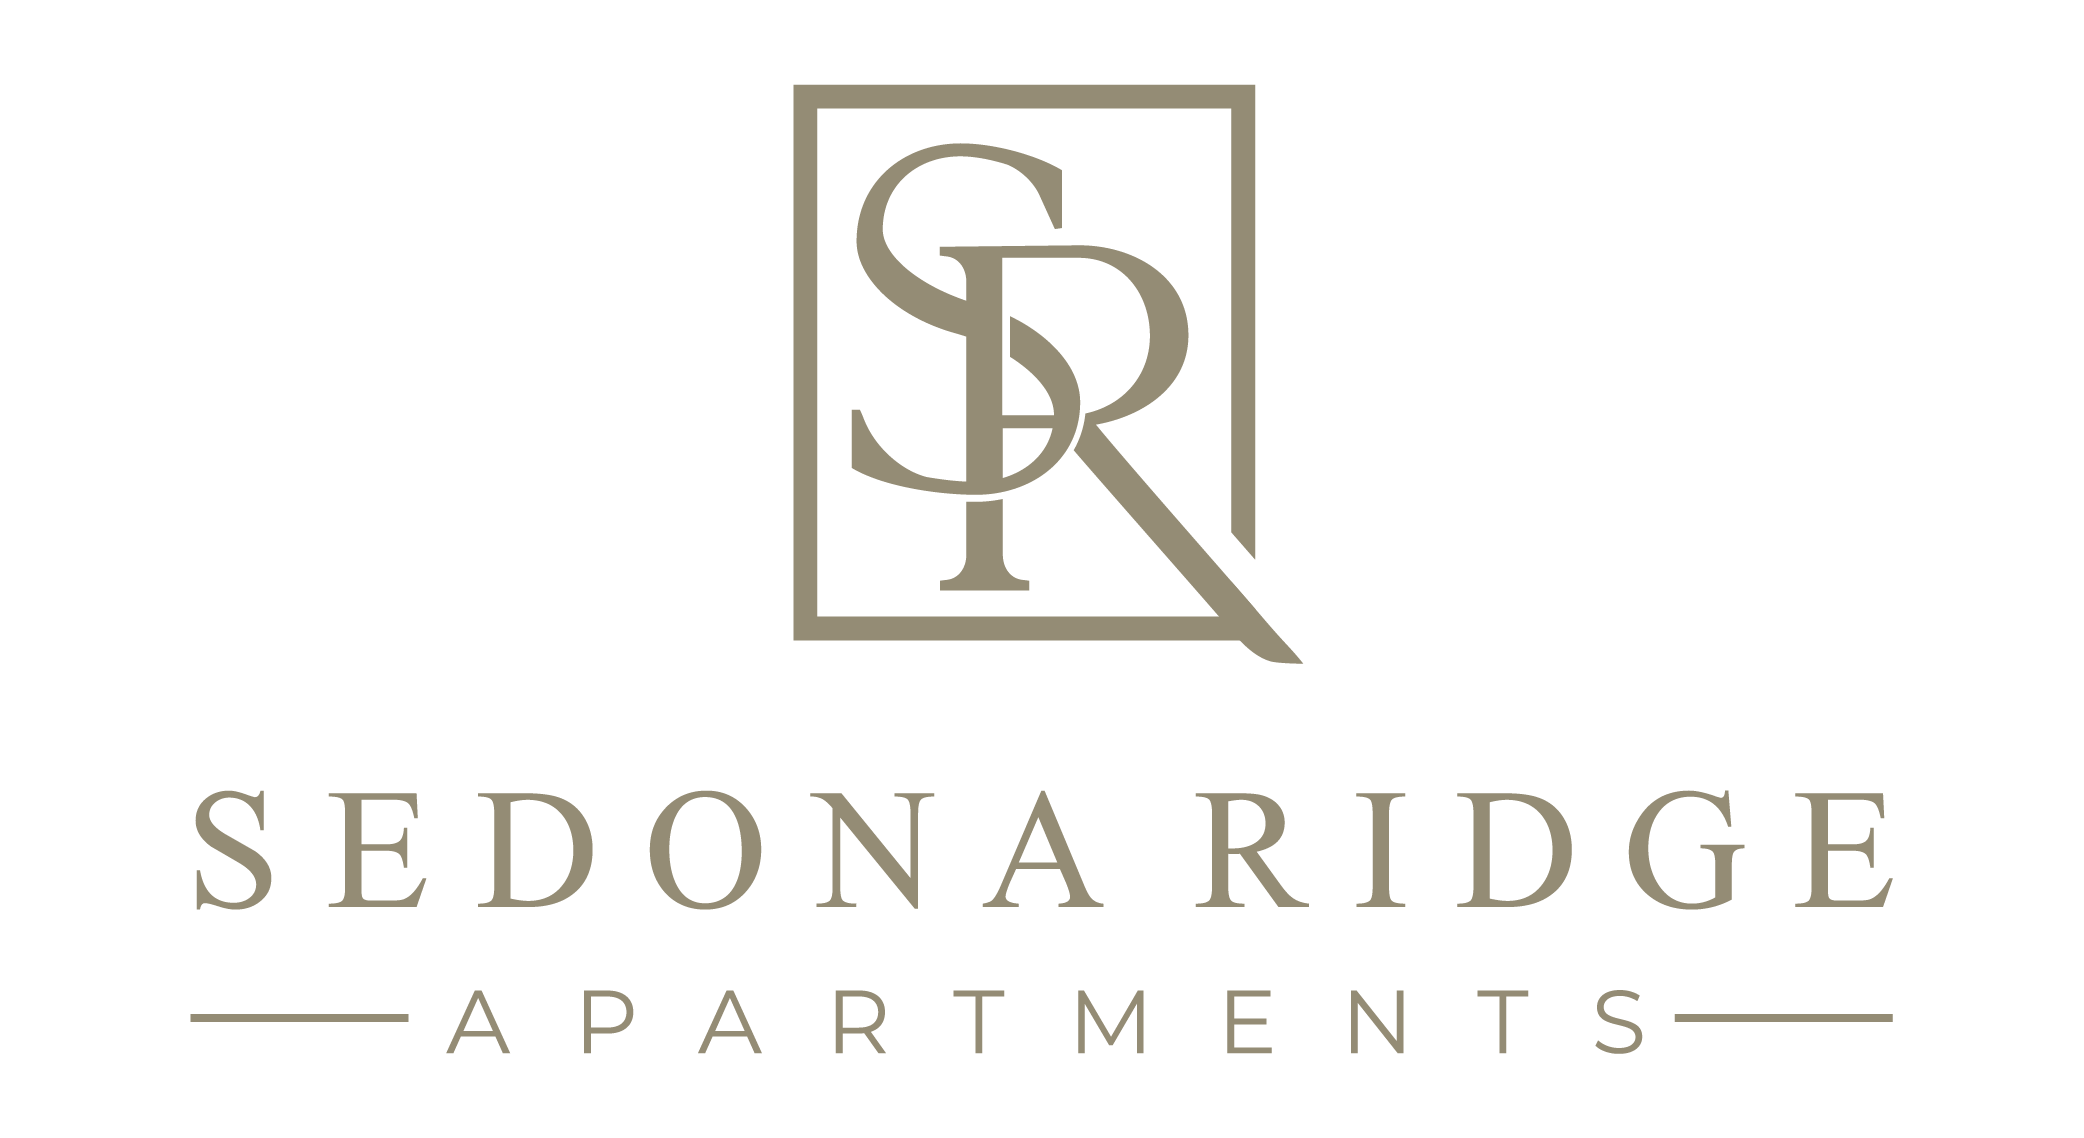 Sedona Ridge Apartments logo